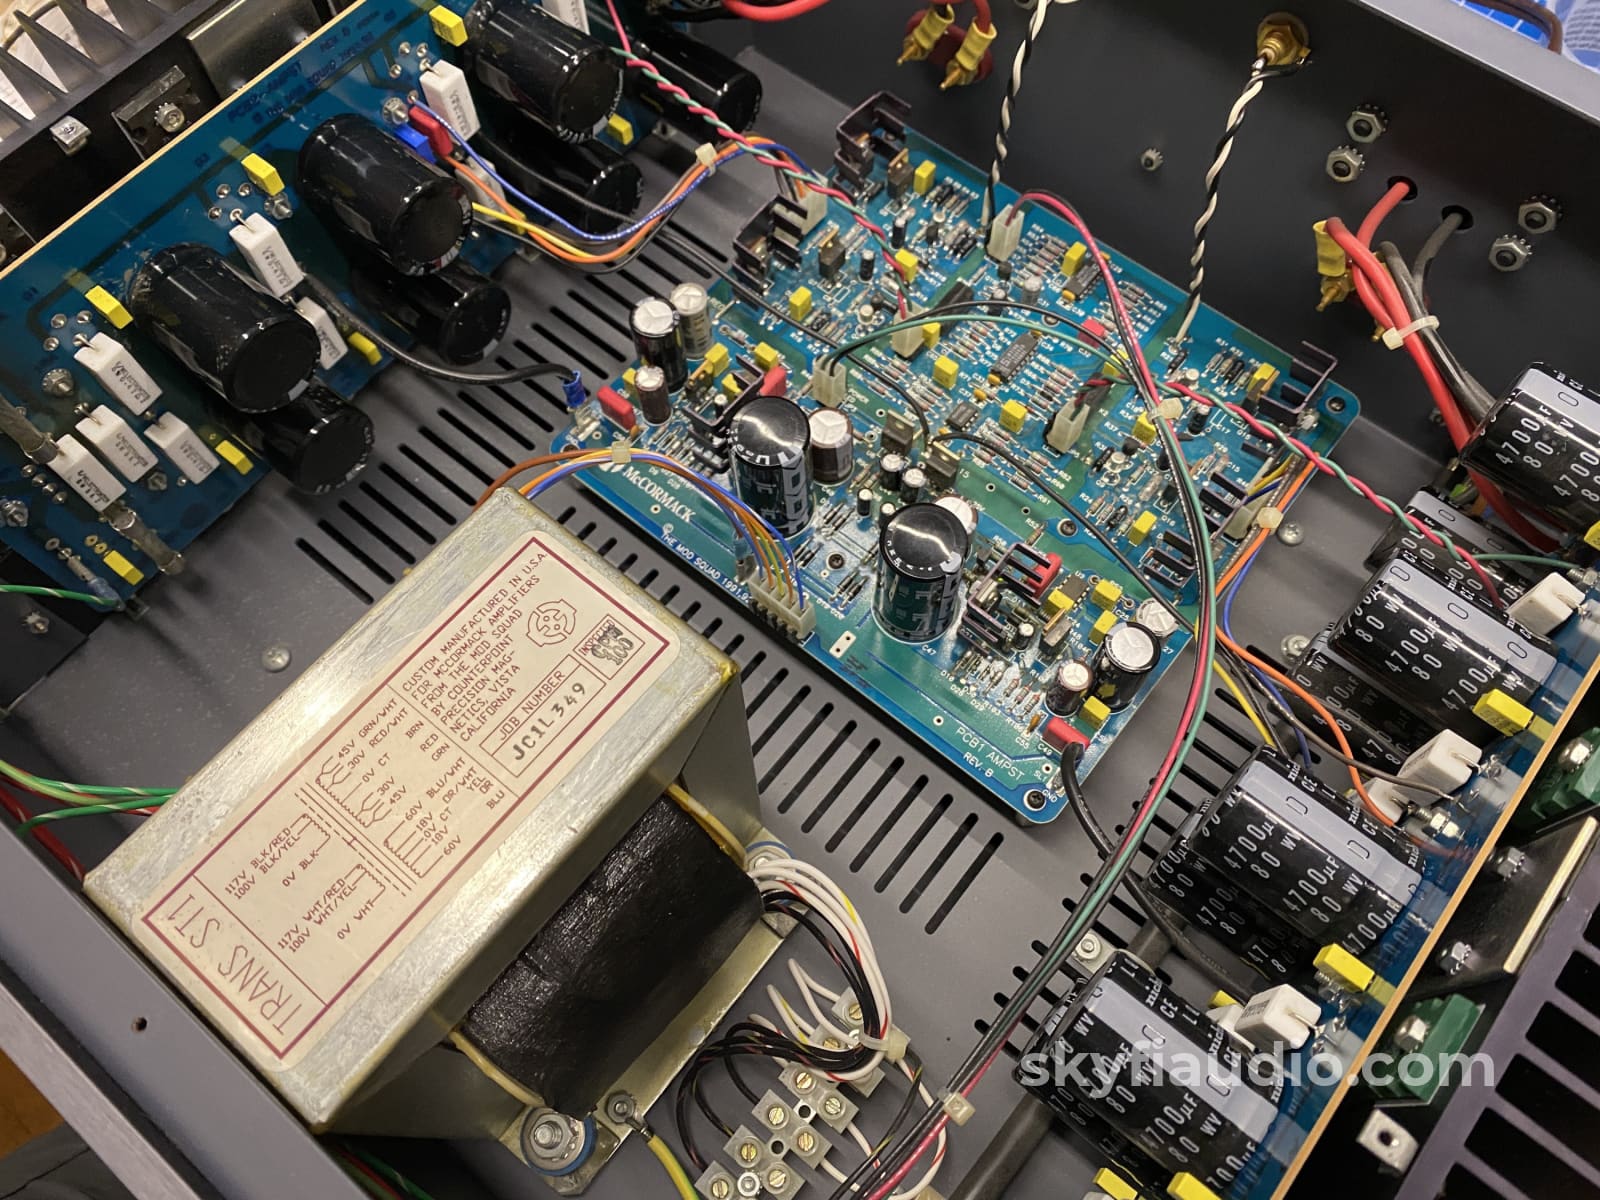 Mccormack Power Drive Dna-1 Amplifier